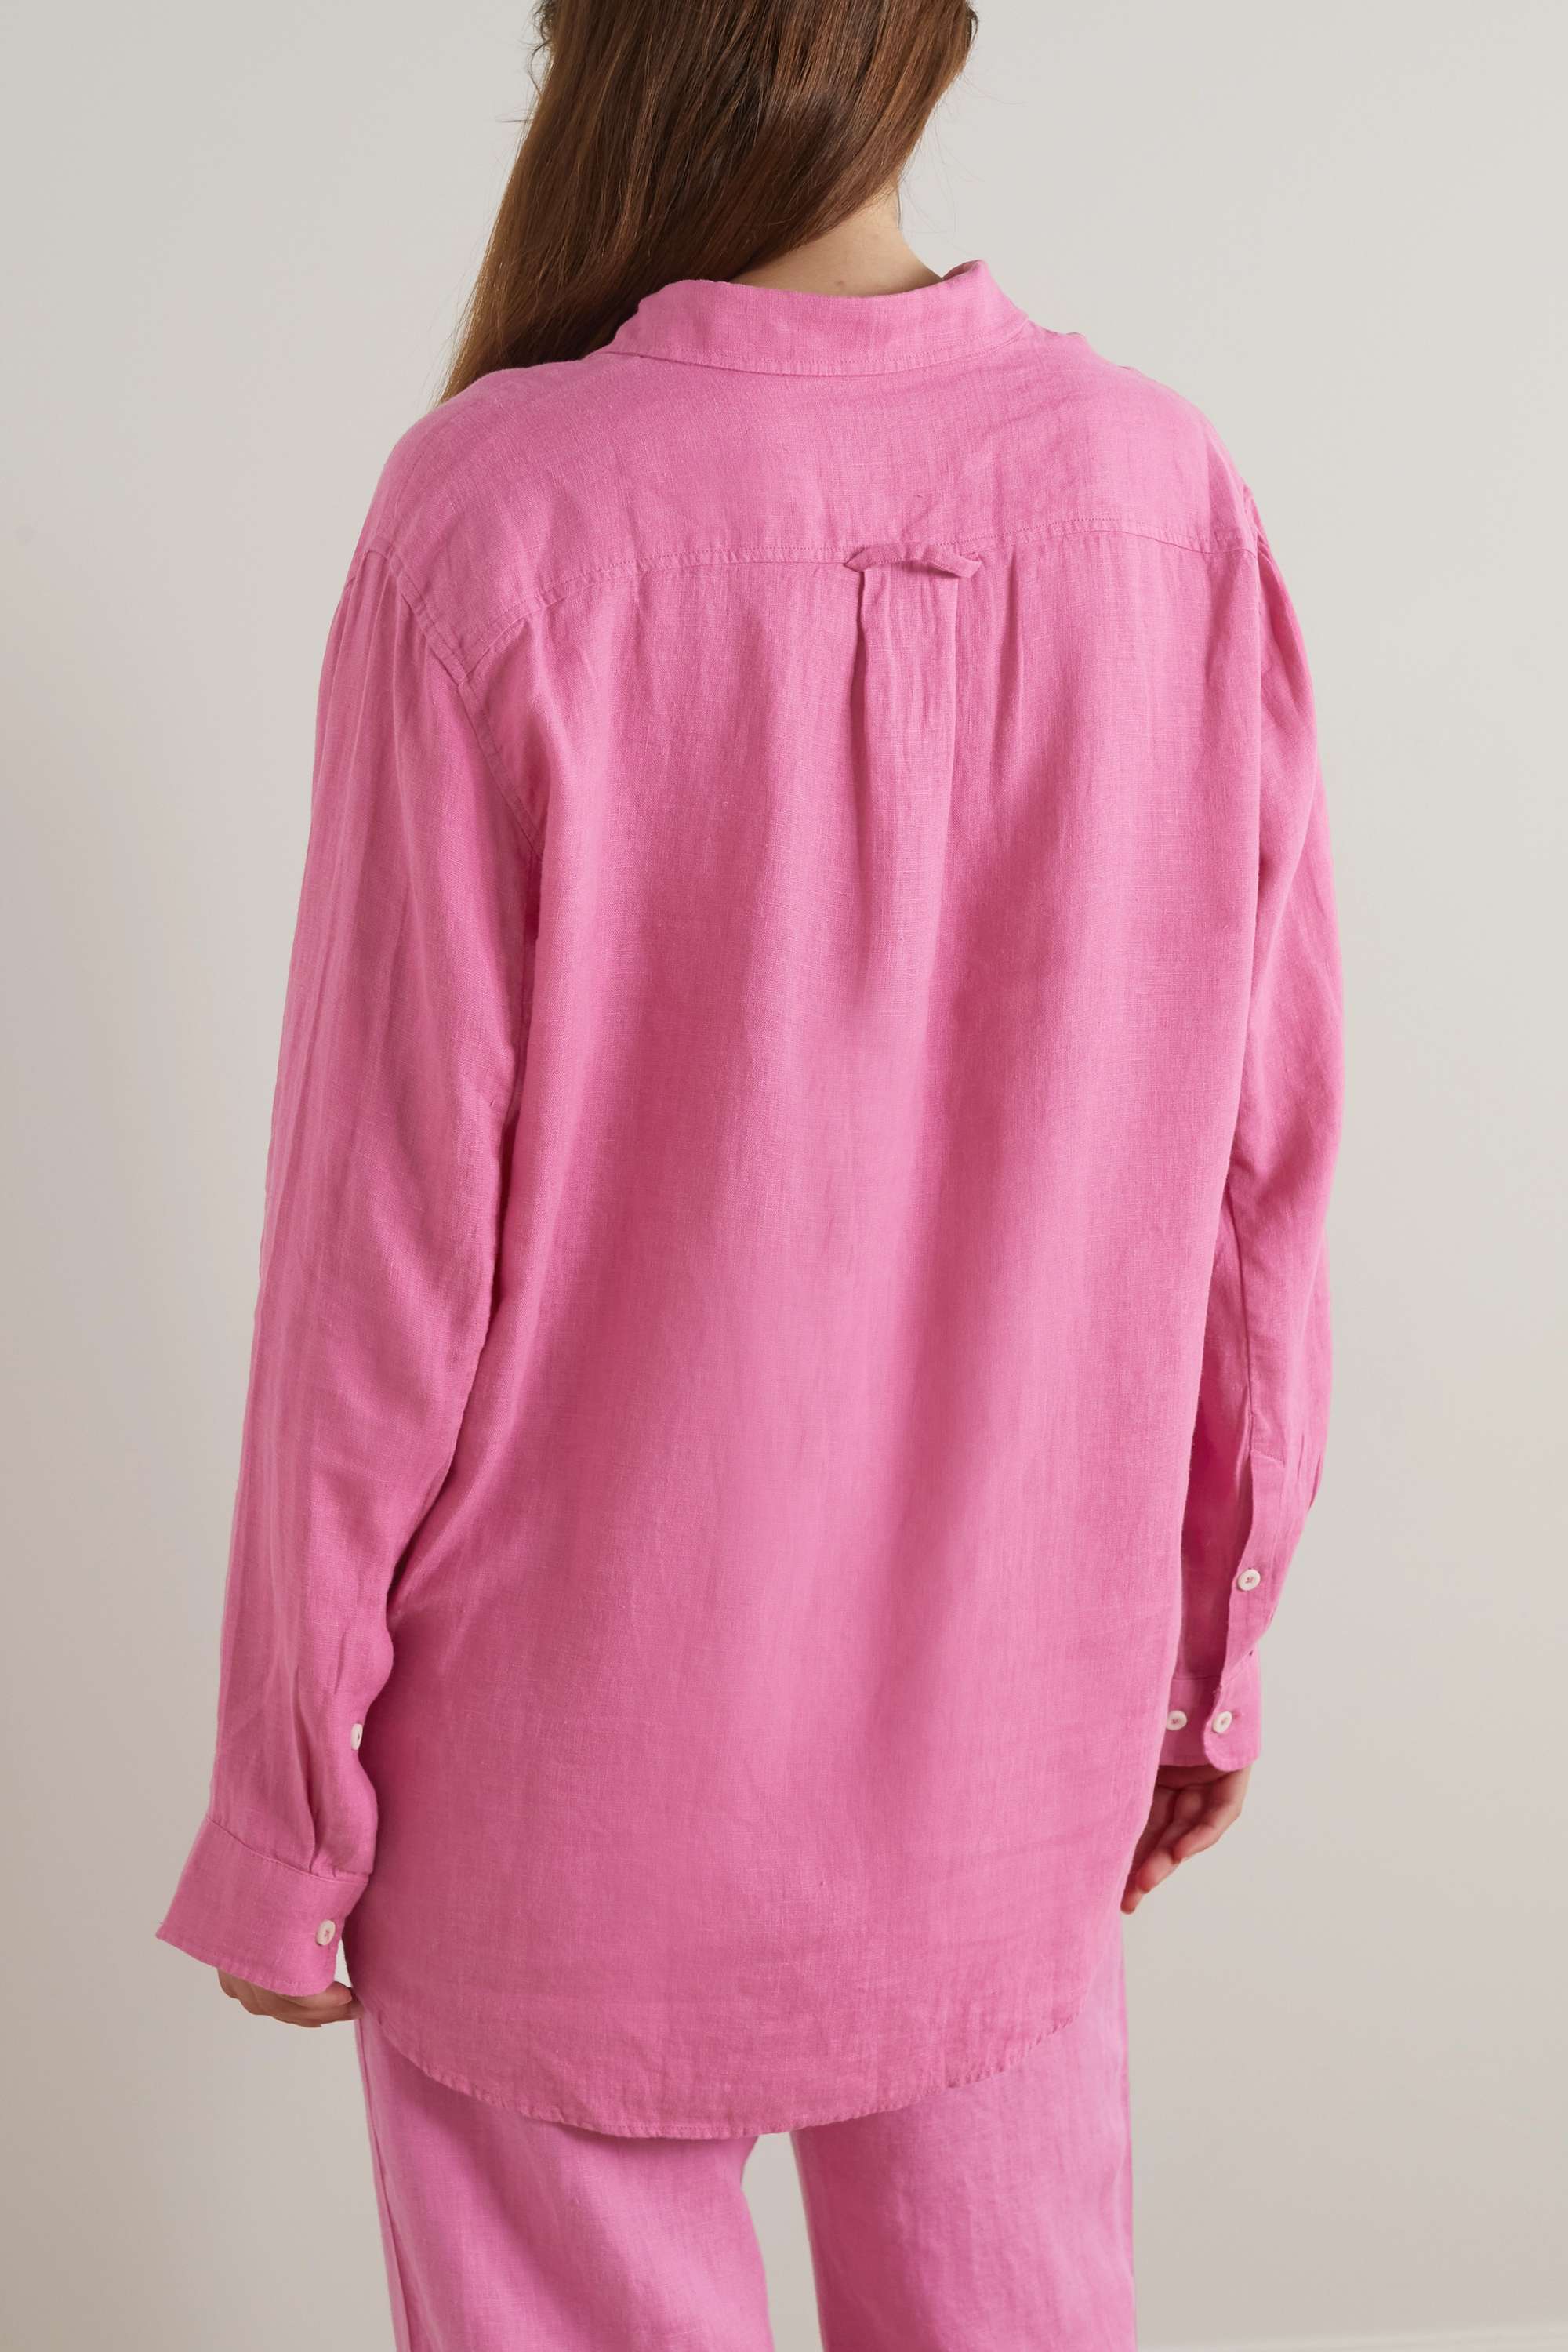 DESMOND & DEMPSEY + льняная рубашка NET SUSTAIN, розовый amy dempsey destination art